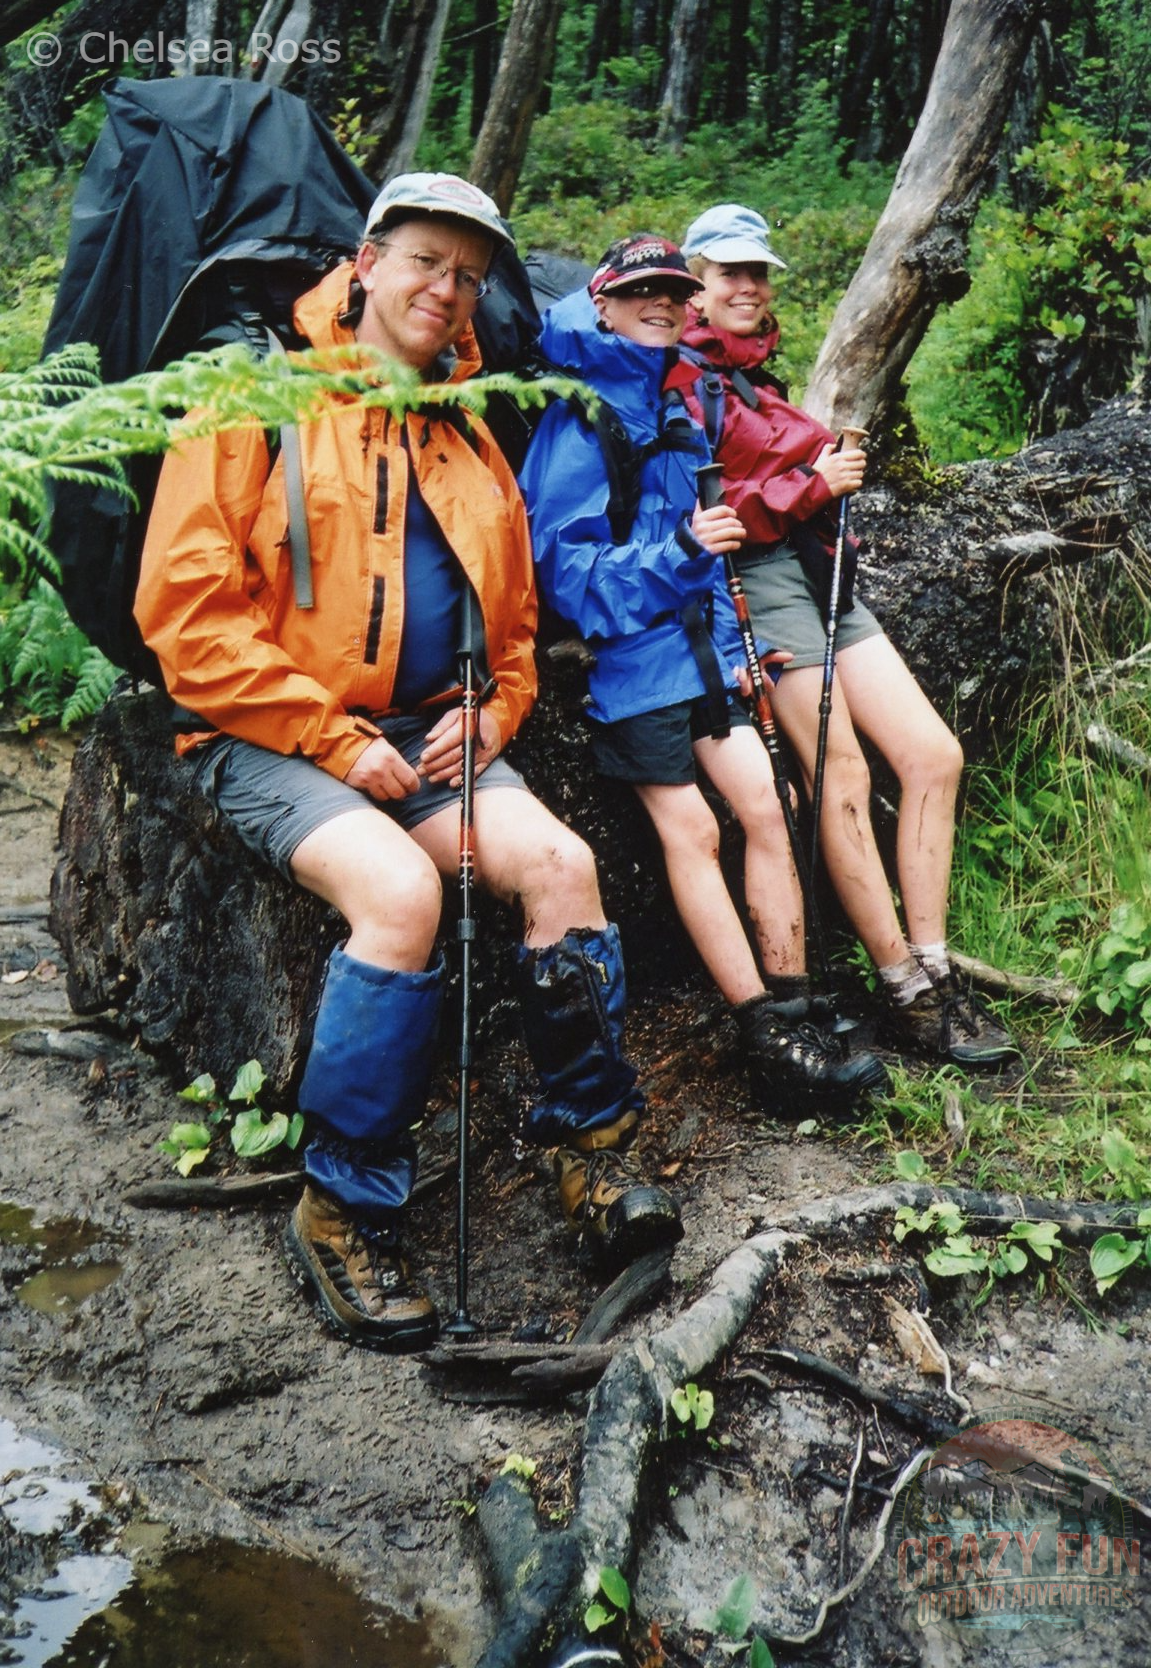 A man, boy and girl sitting on a log.